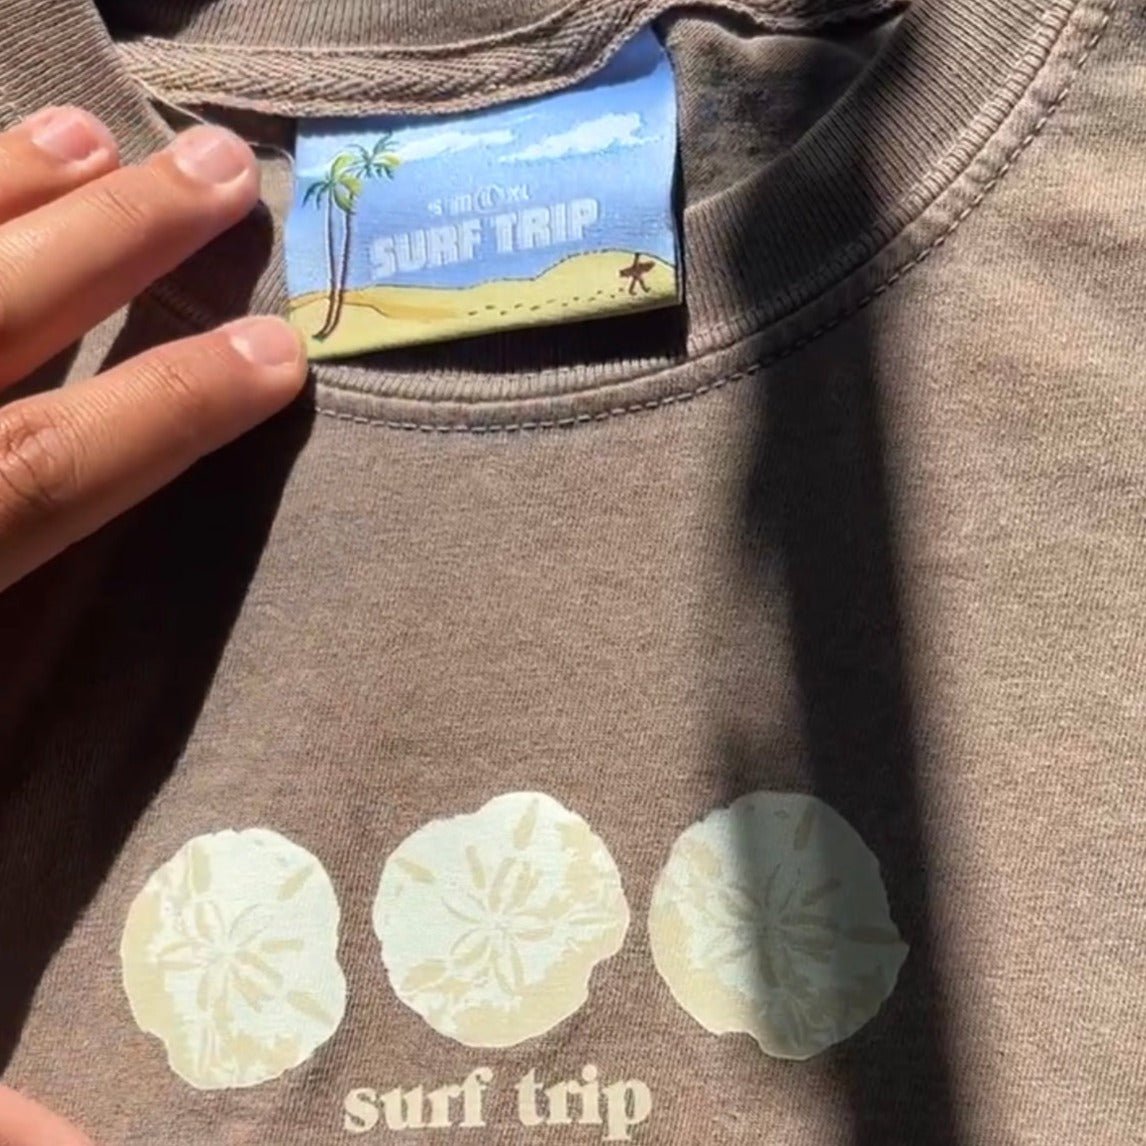 Sand Dollar Tee - Surf Trip Supply